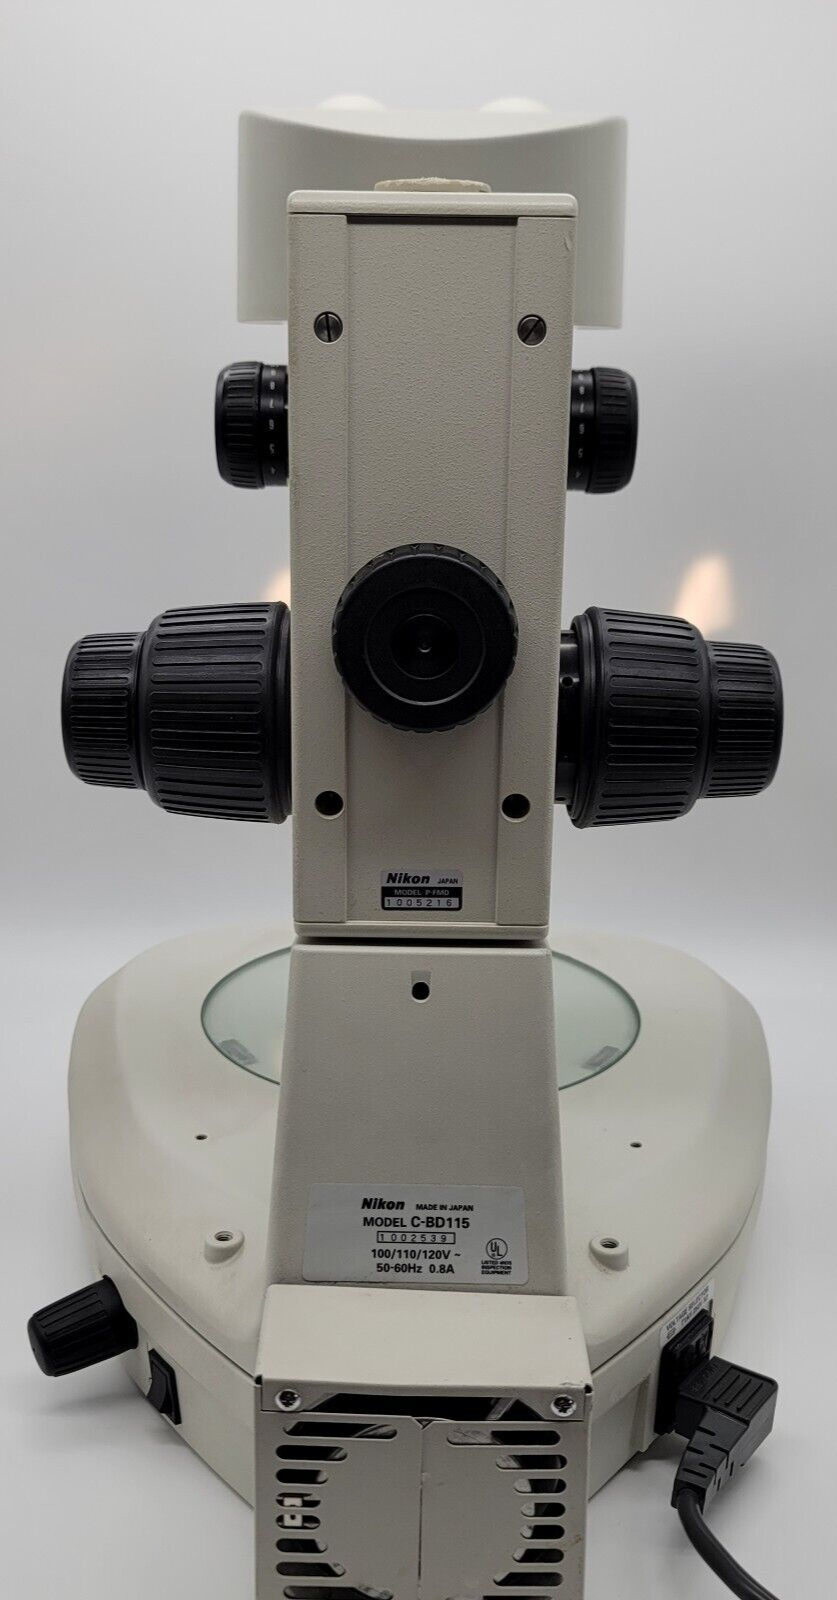 Nikon Microscope SMZ1500 With Brightfield Darkfeild Base - microscopemarketplace